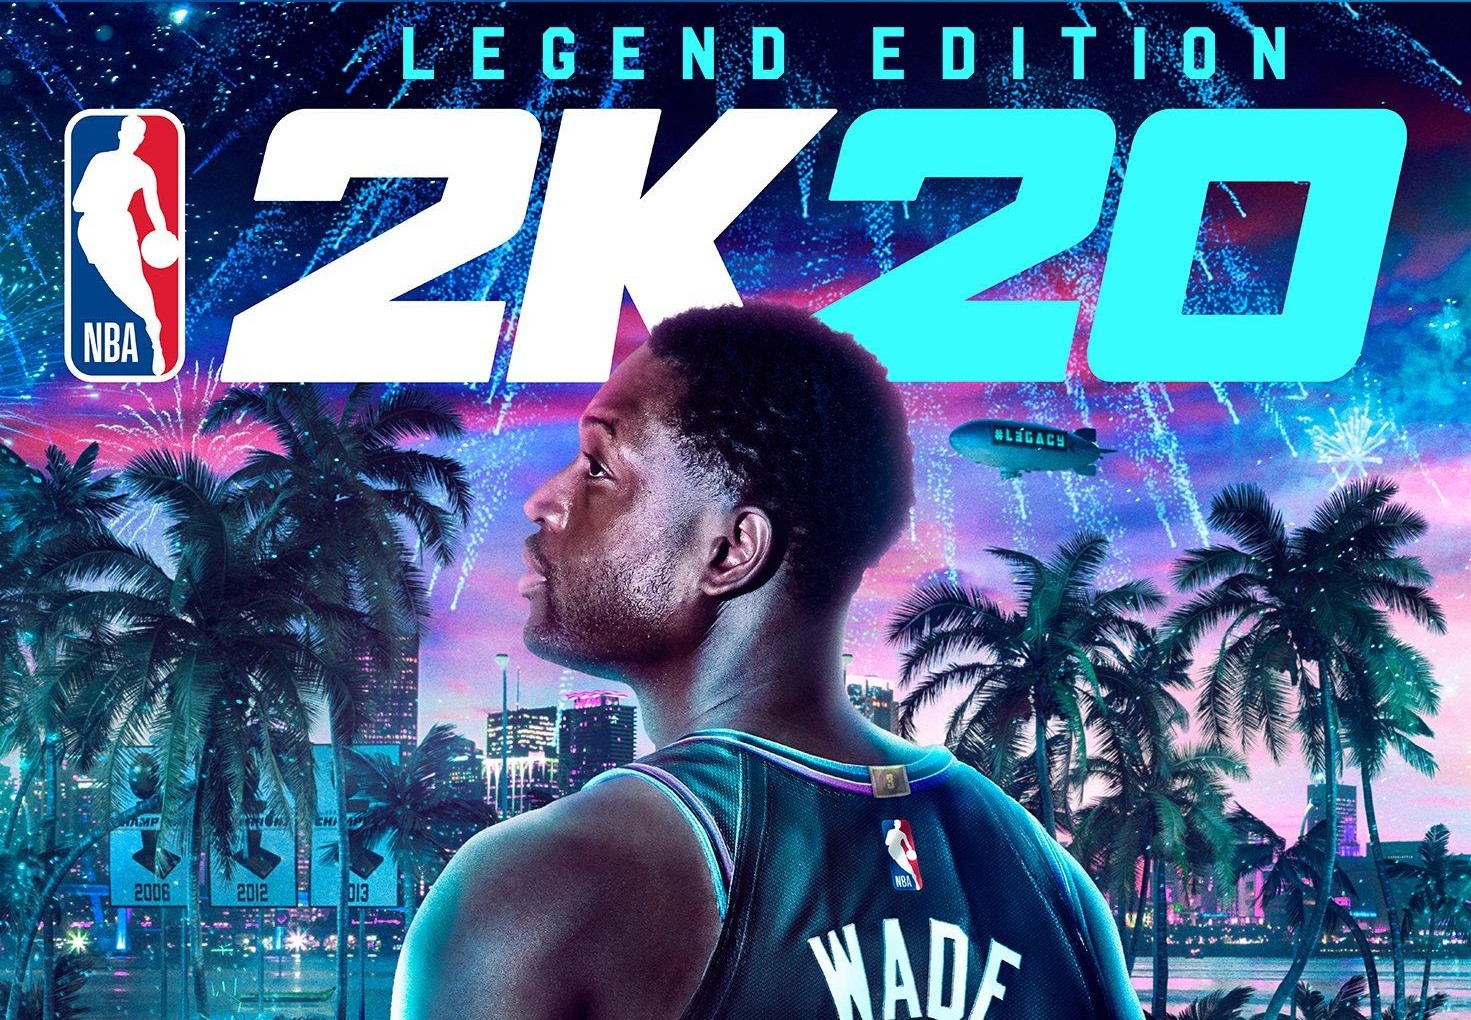 NBA 2K20 Legend Edition EU Steam CD Key